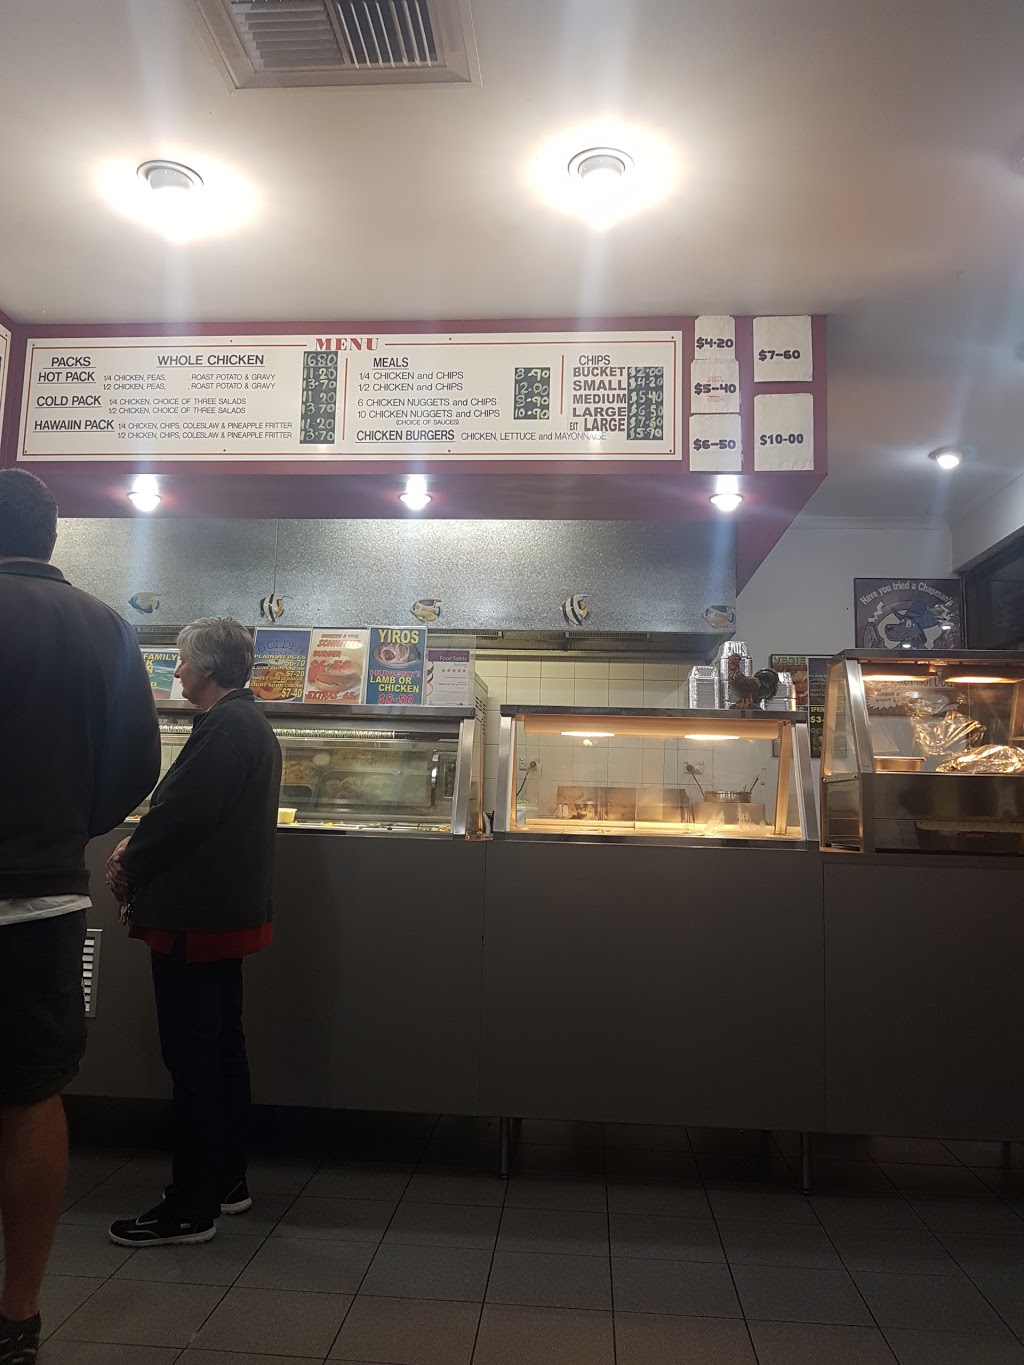 Jans Fish Chips Chickery | meal takeaway | Scottys Corner Cnr Diagonal Rd & Cliff St Road, Glenelg East SA 5045, Australia | 0882953833 OR +61 8 8295 3833